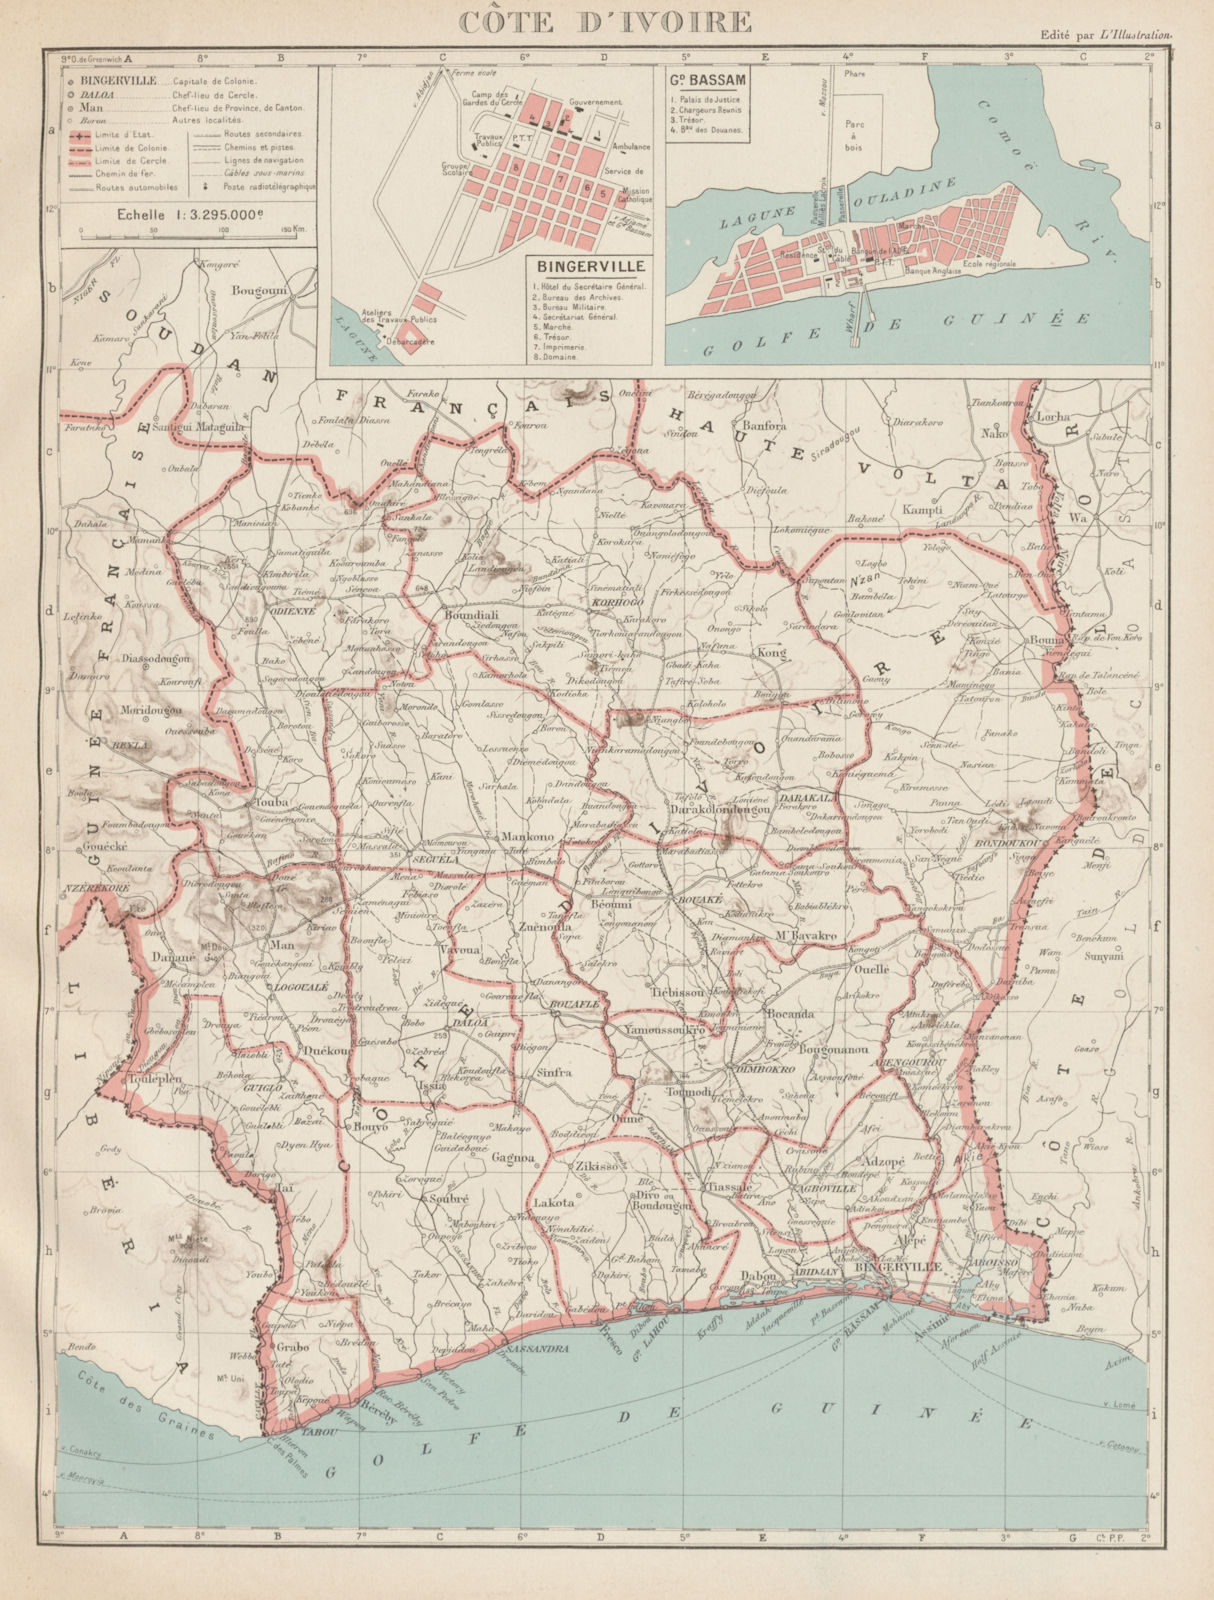 IVORY COAST Côte d'Ivoire. Bingerville (Abidjan) Grand Bassam city plan 1929 map